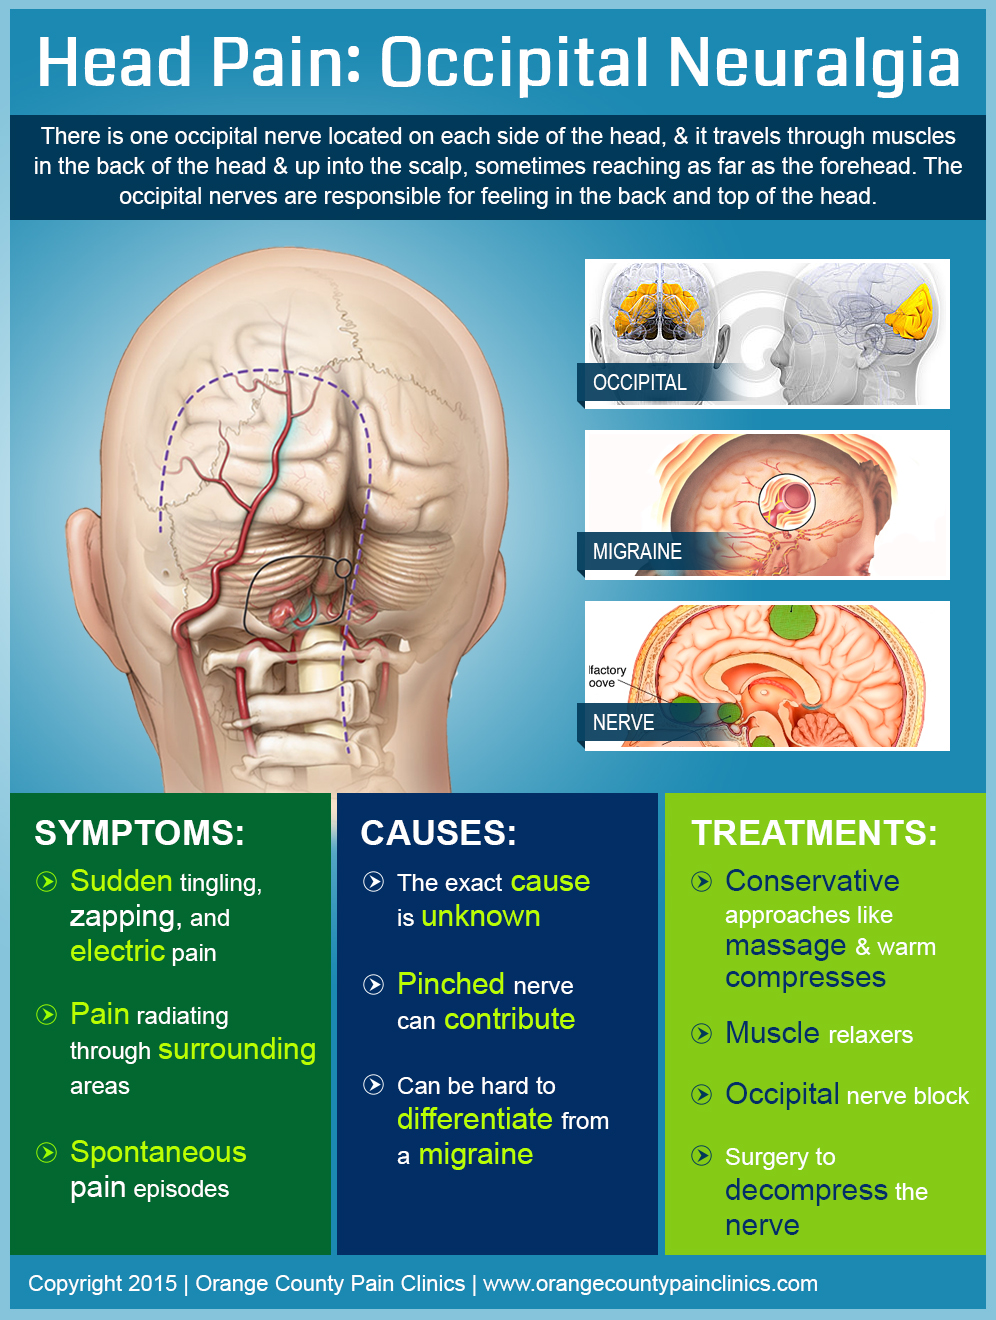 Head-Pain-Occipital-Neuralgia-by-Orange-County-Pain-Clinics